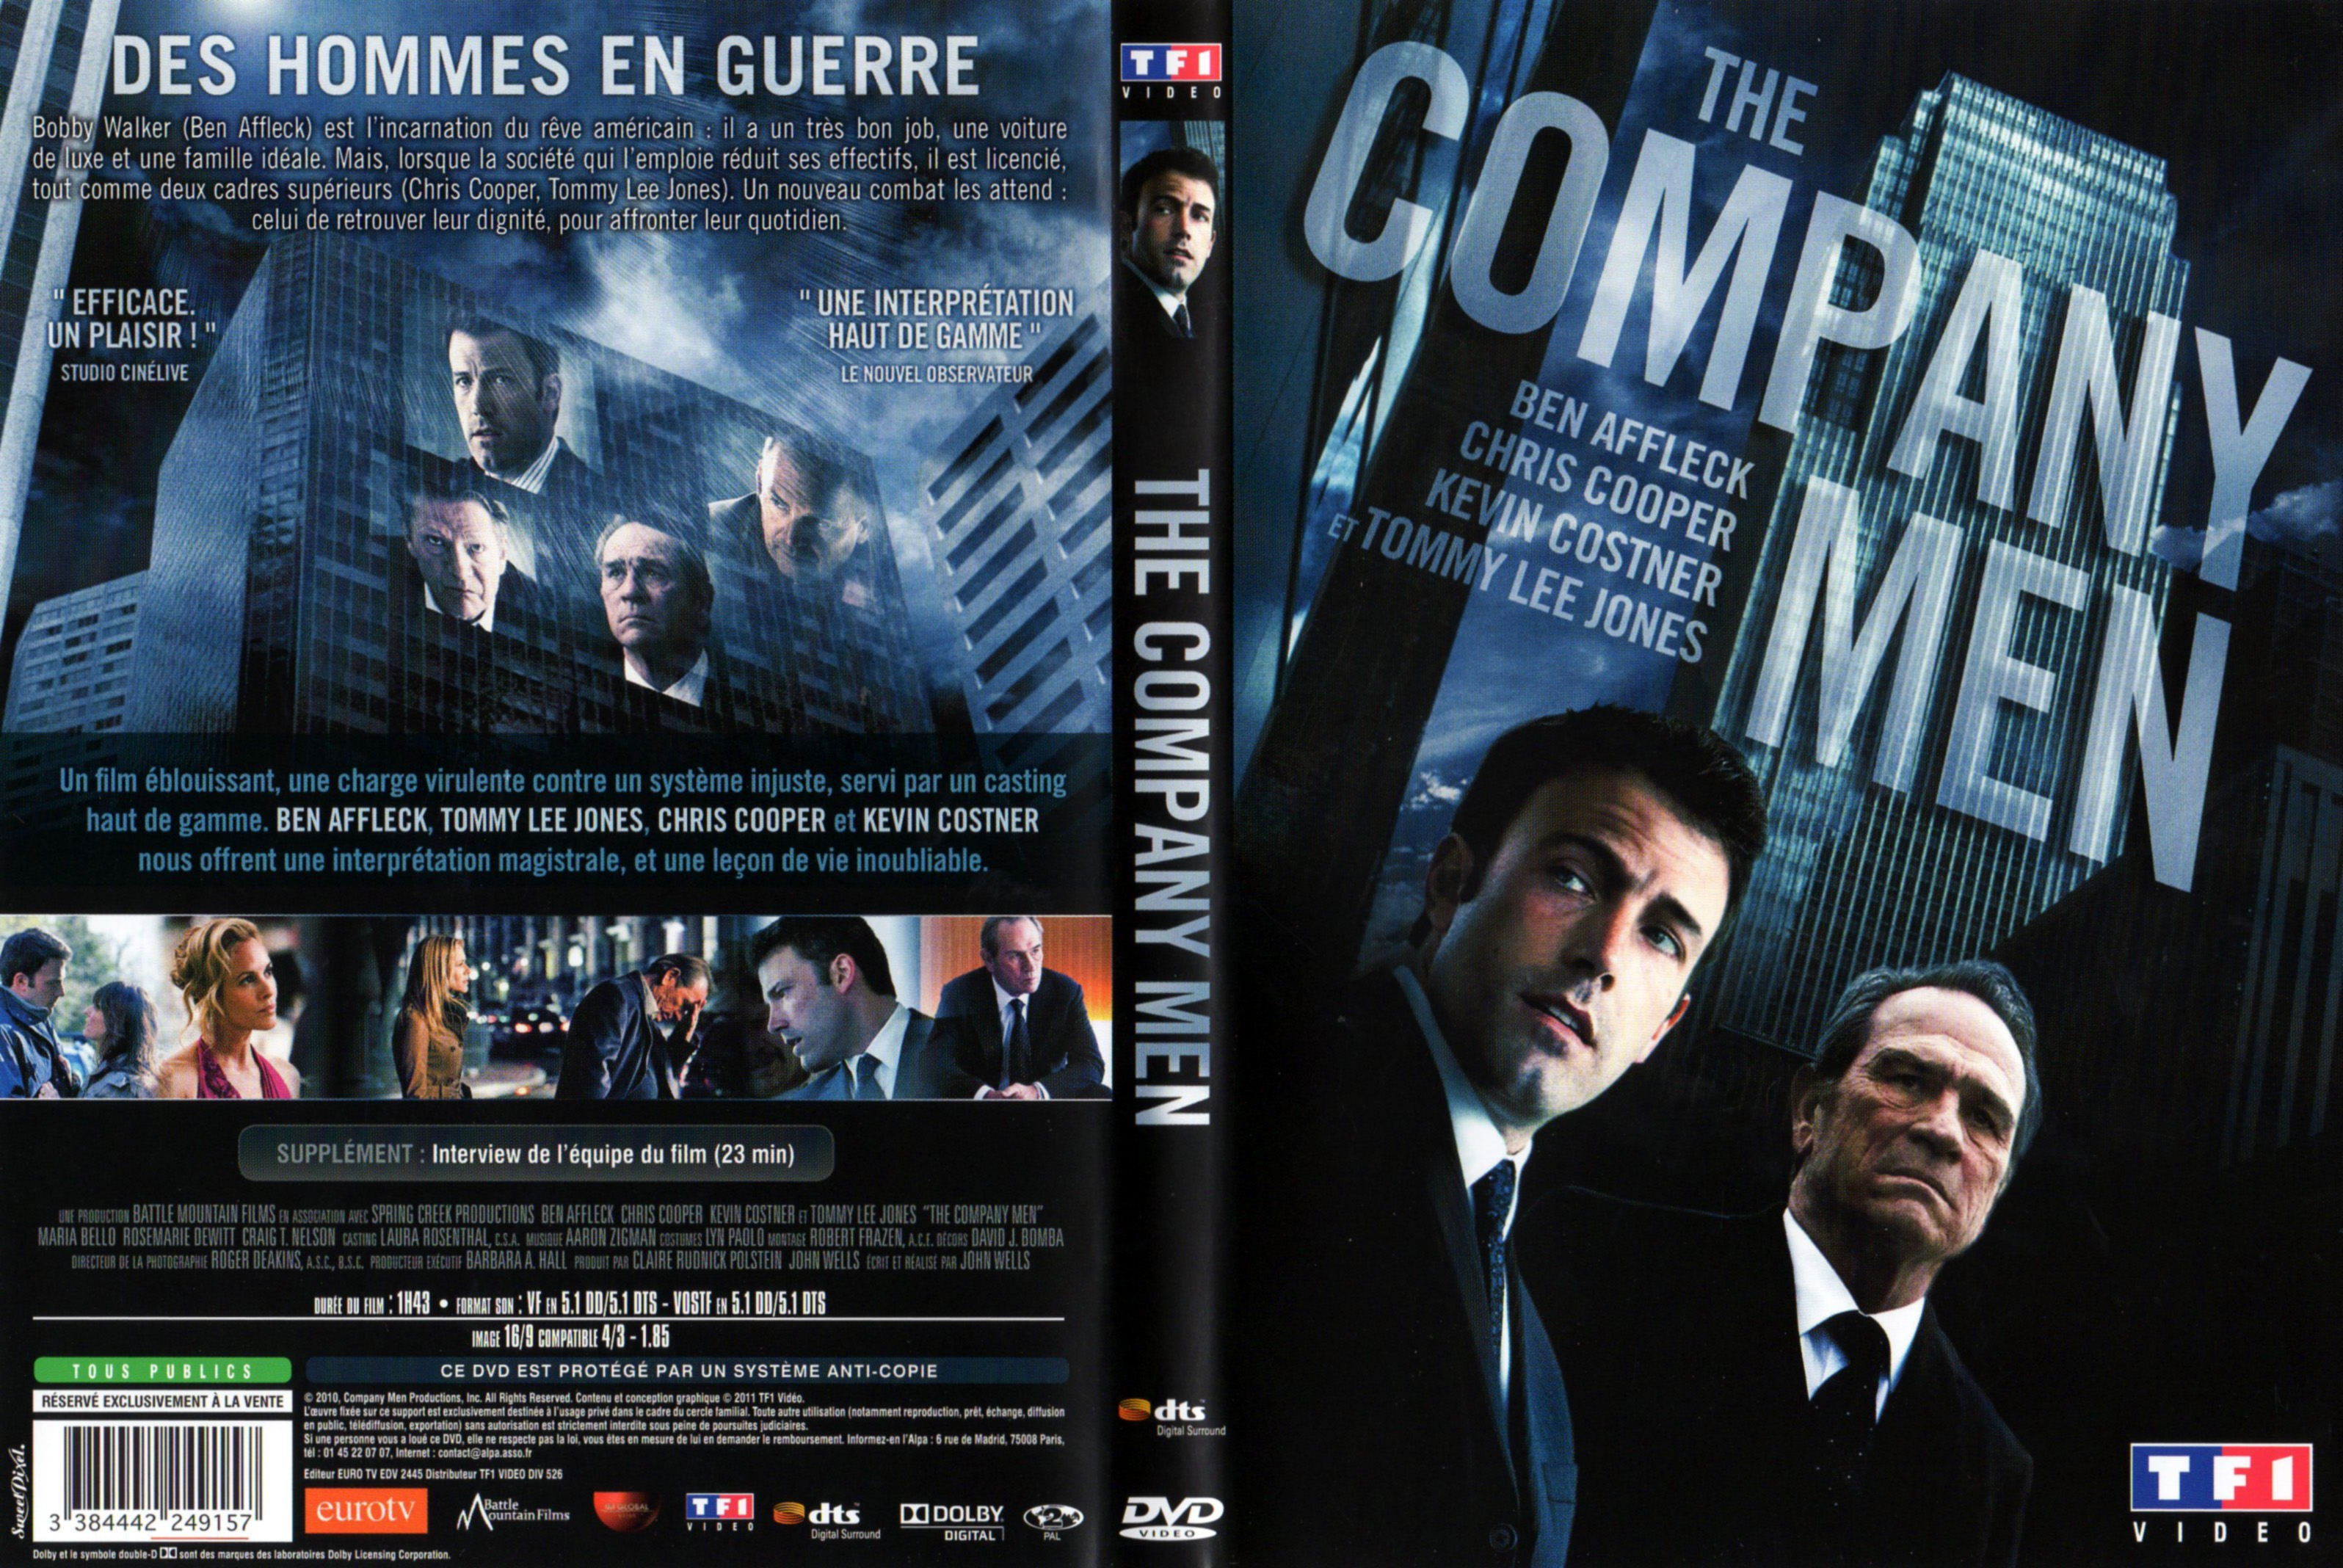 Jaquette DVD The company men